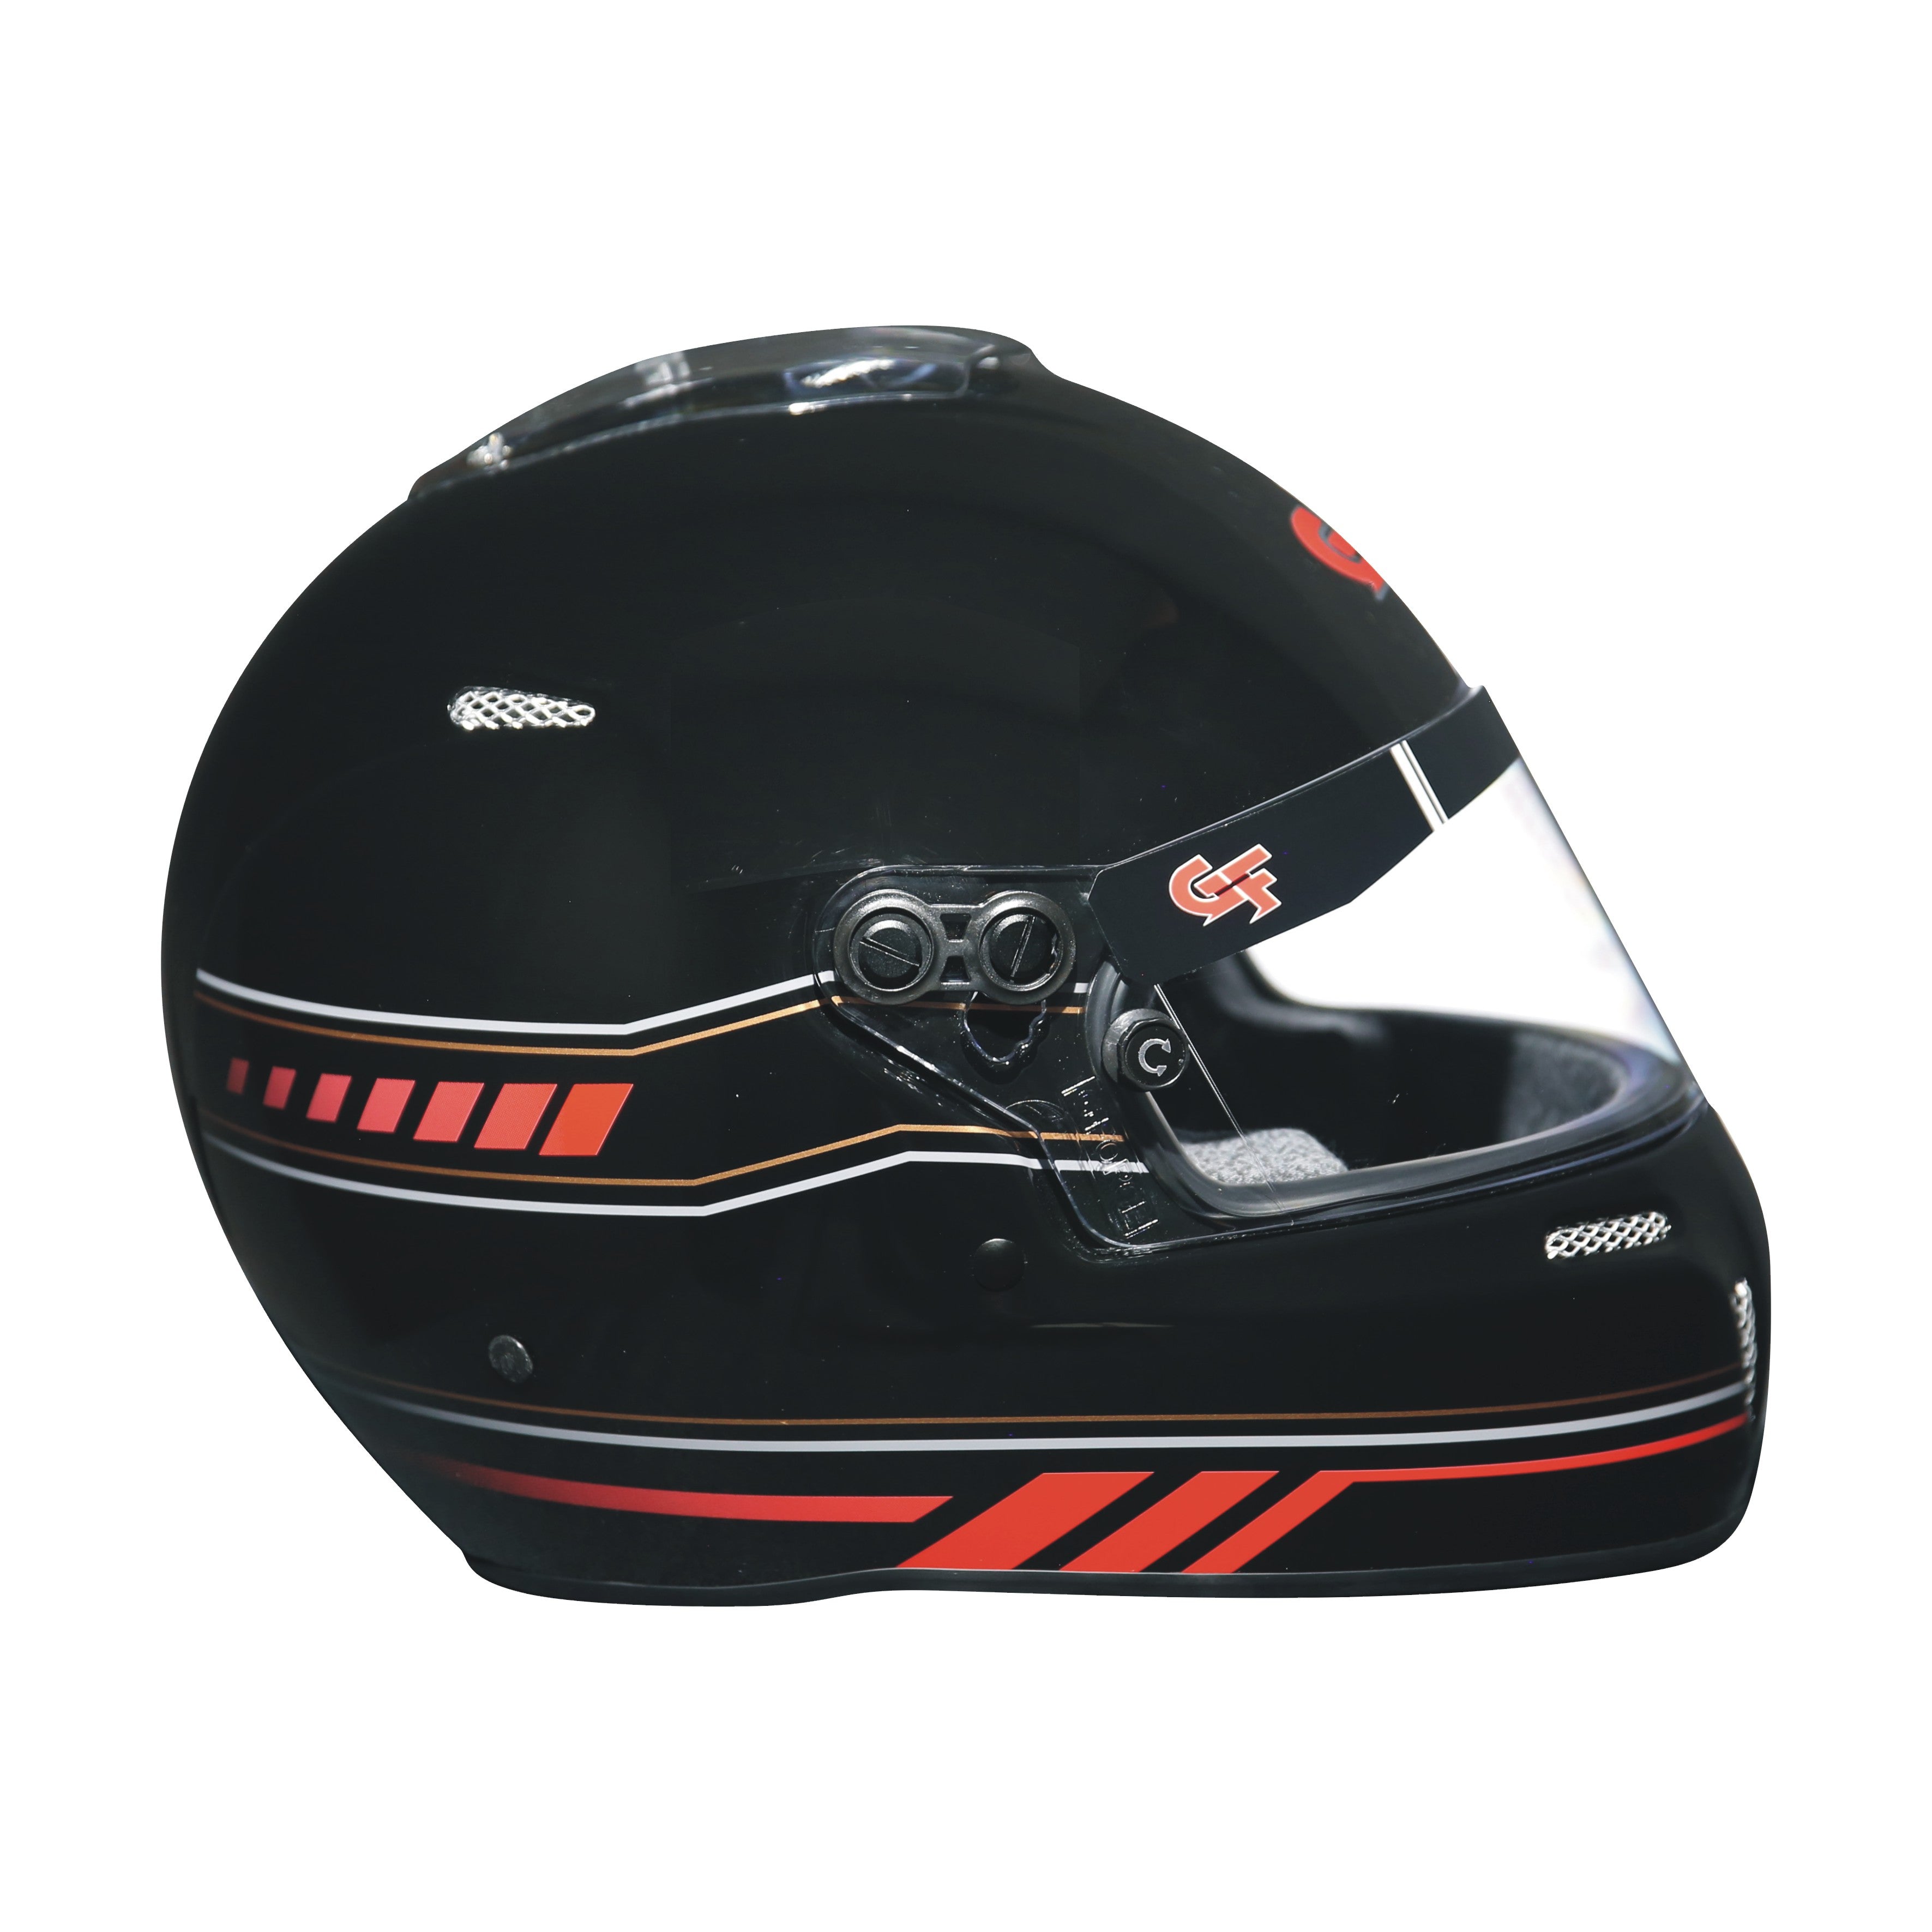 Nighthawk Graphics SA2020 Helmet